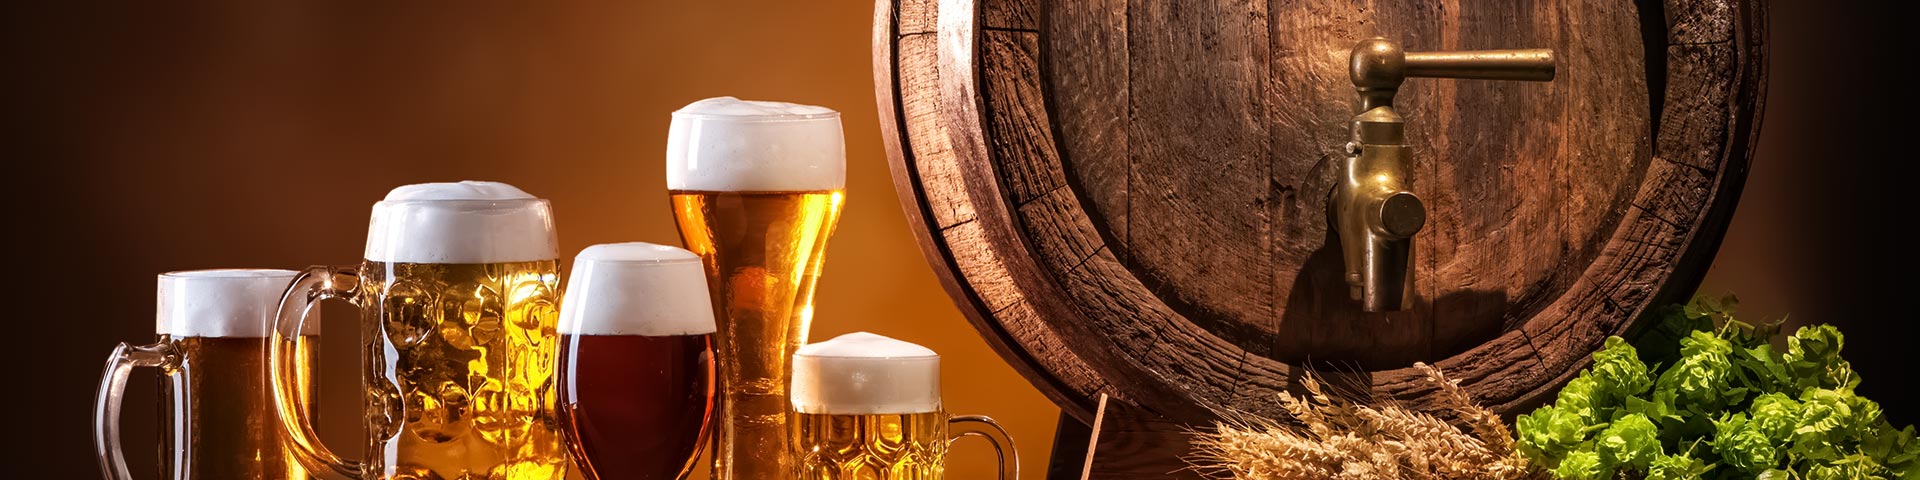 Czech Beer Culture